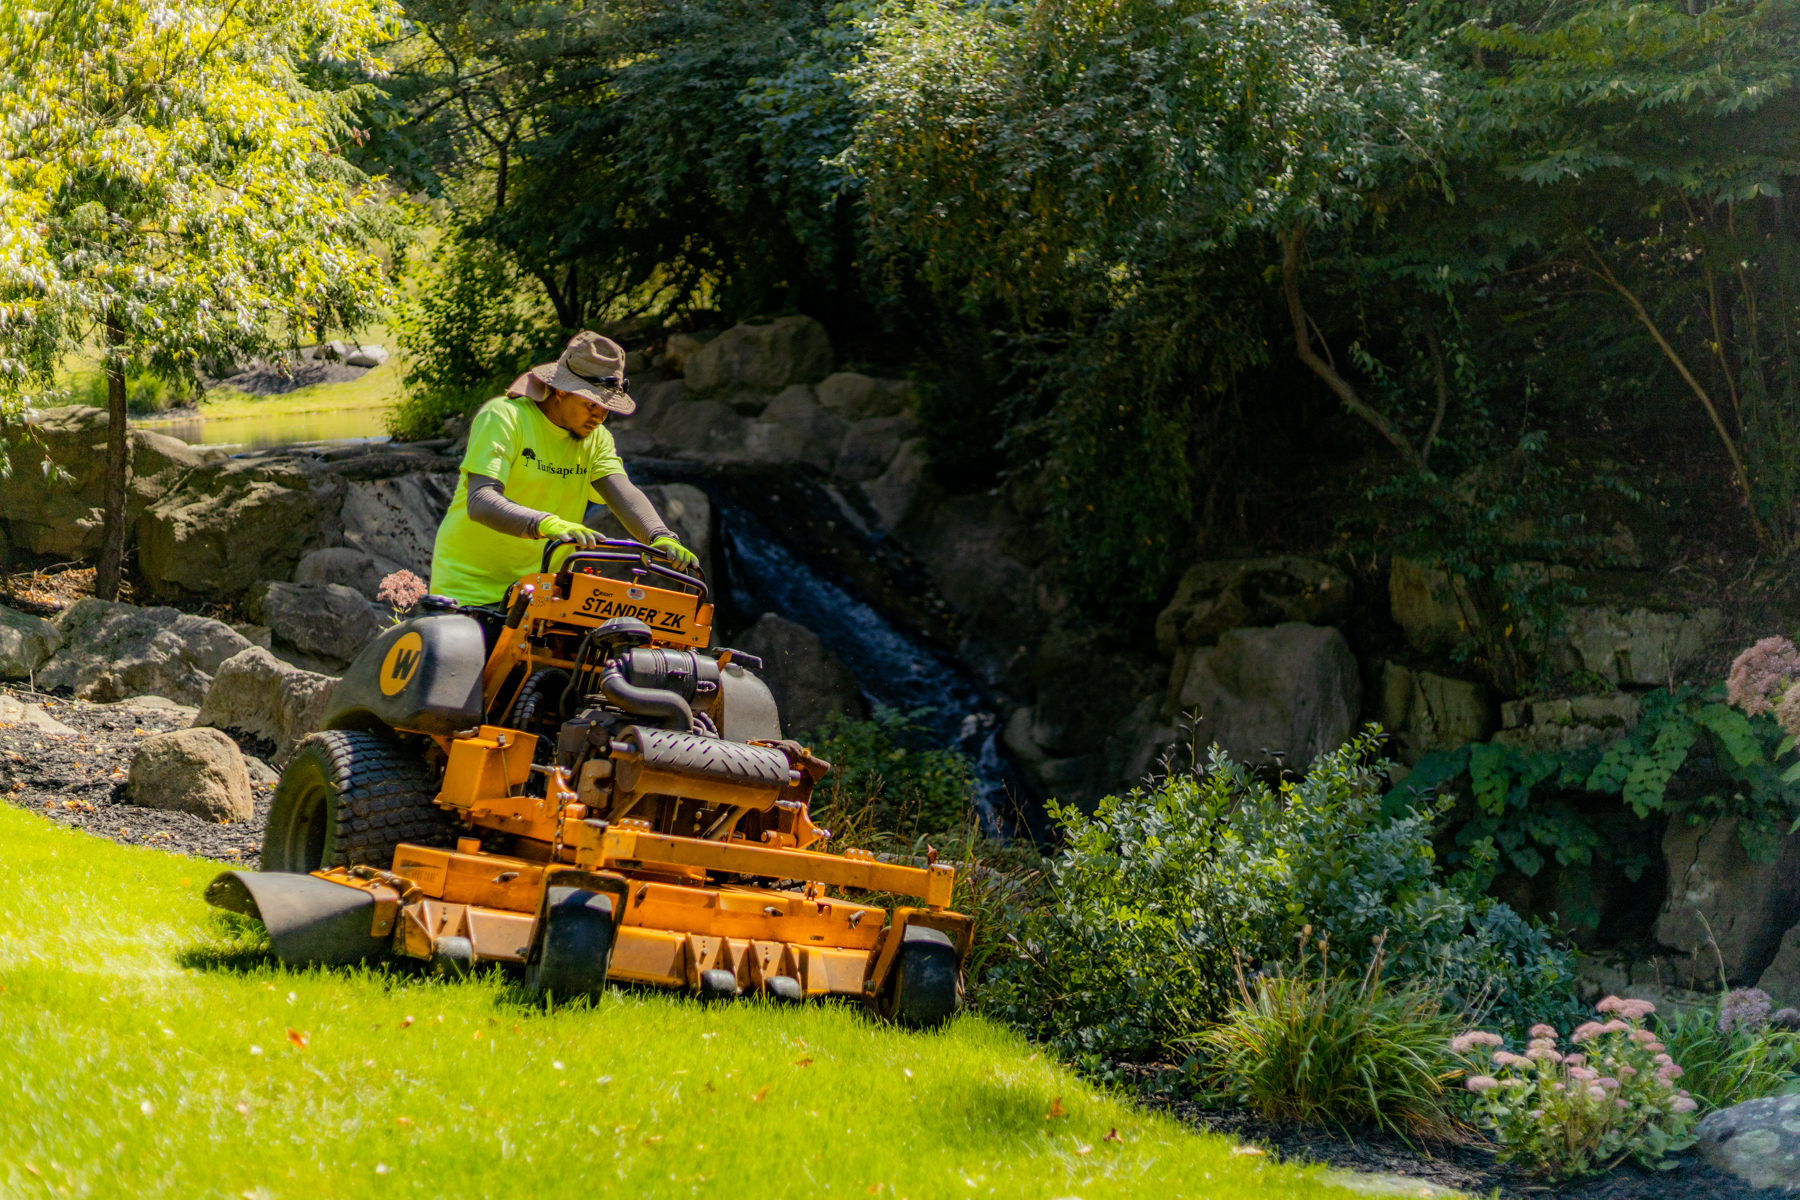 Mowing and landscape maintenance